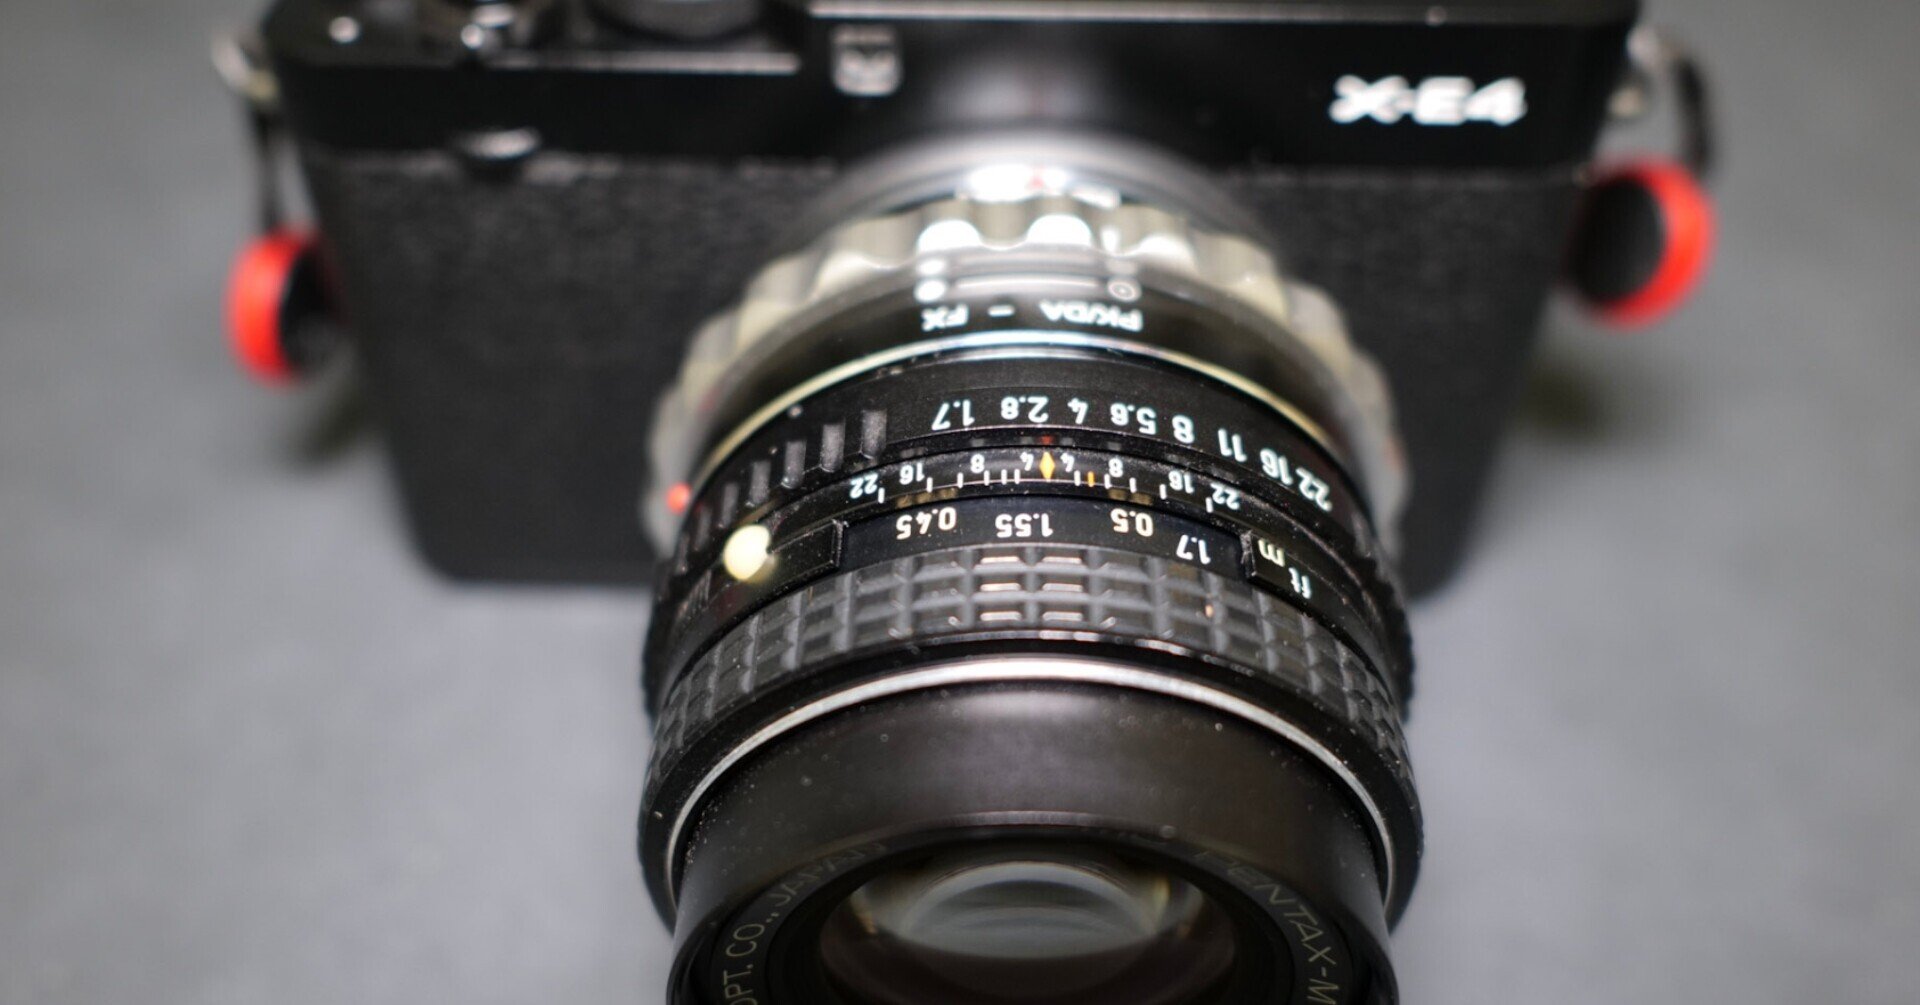 FUJIFILM X-E4はオールドレンズ装着にも良いね!SMC Pentax-M 50mm F1.7